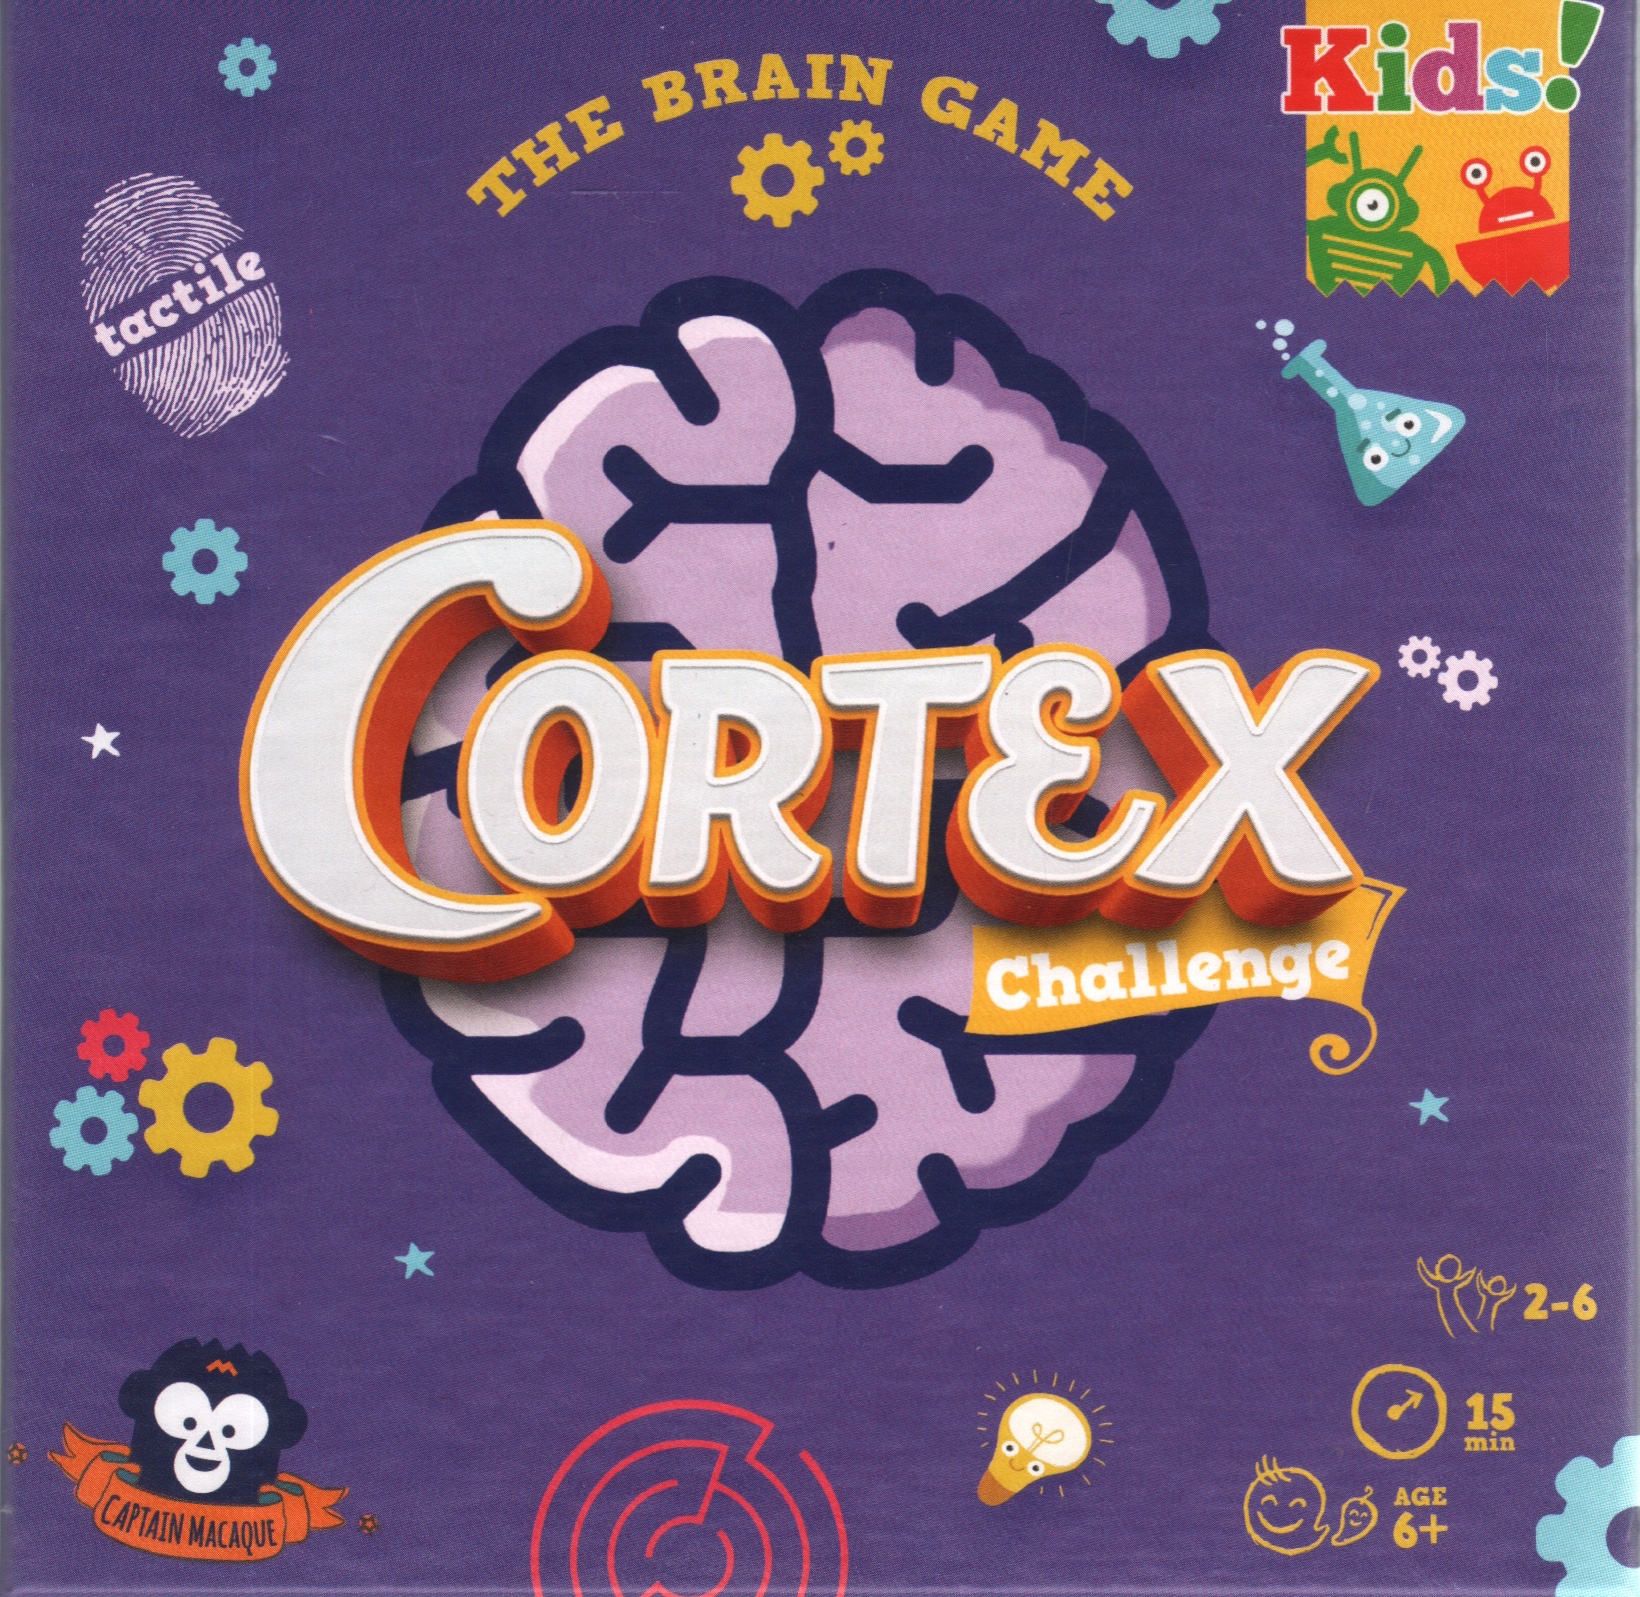 Cortex Challenge: Kids!